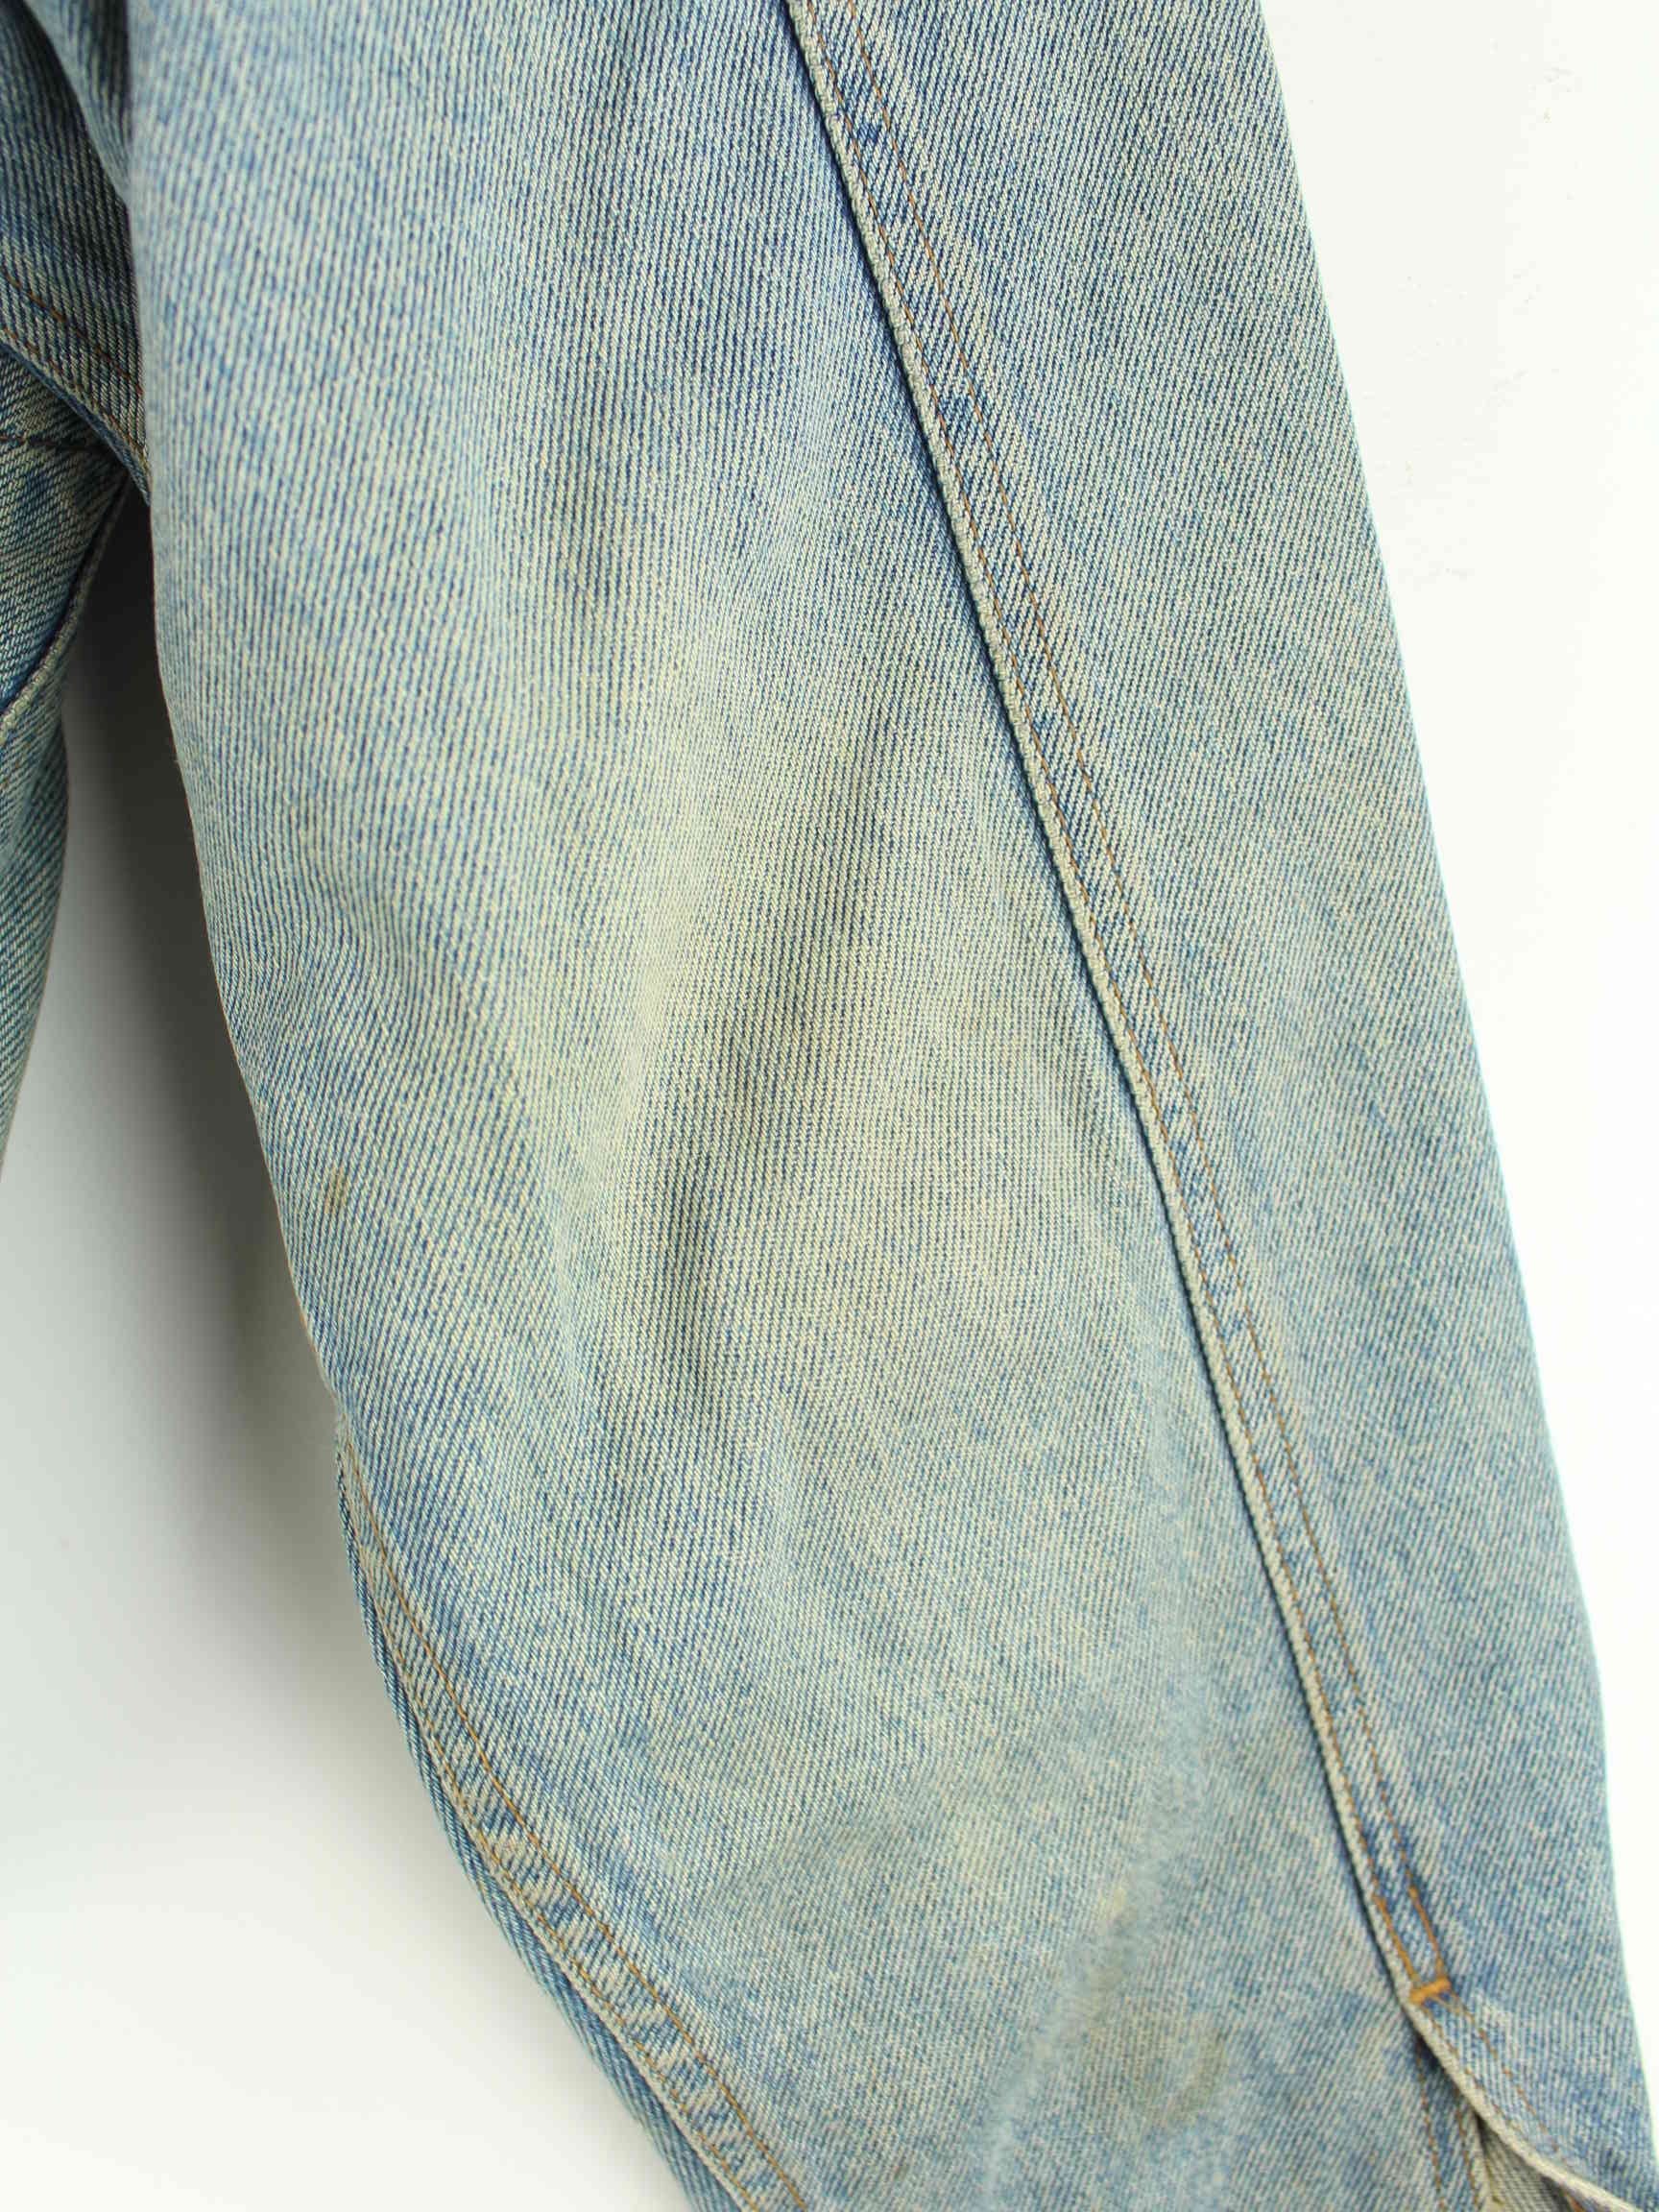 Redskins 90s Vintage Jeans Jacke Blau S (detail image 8)